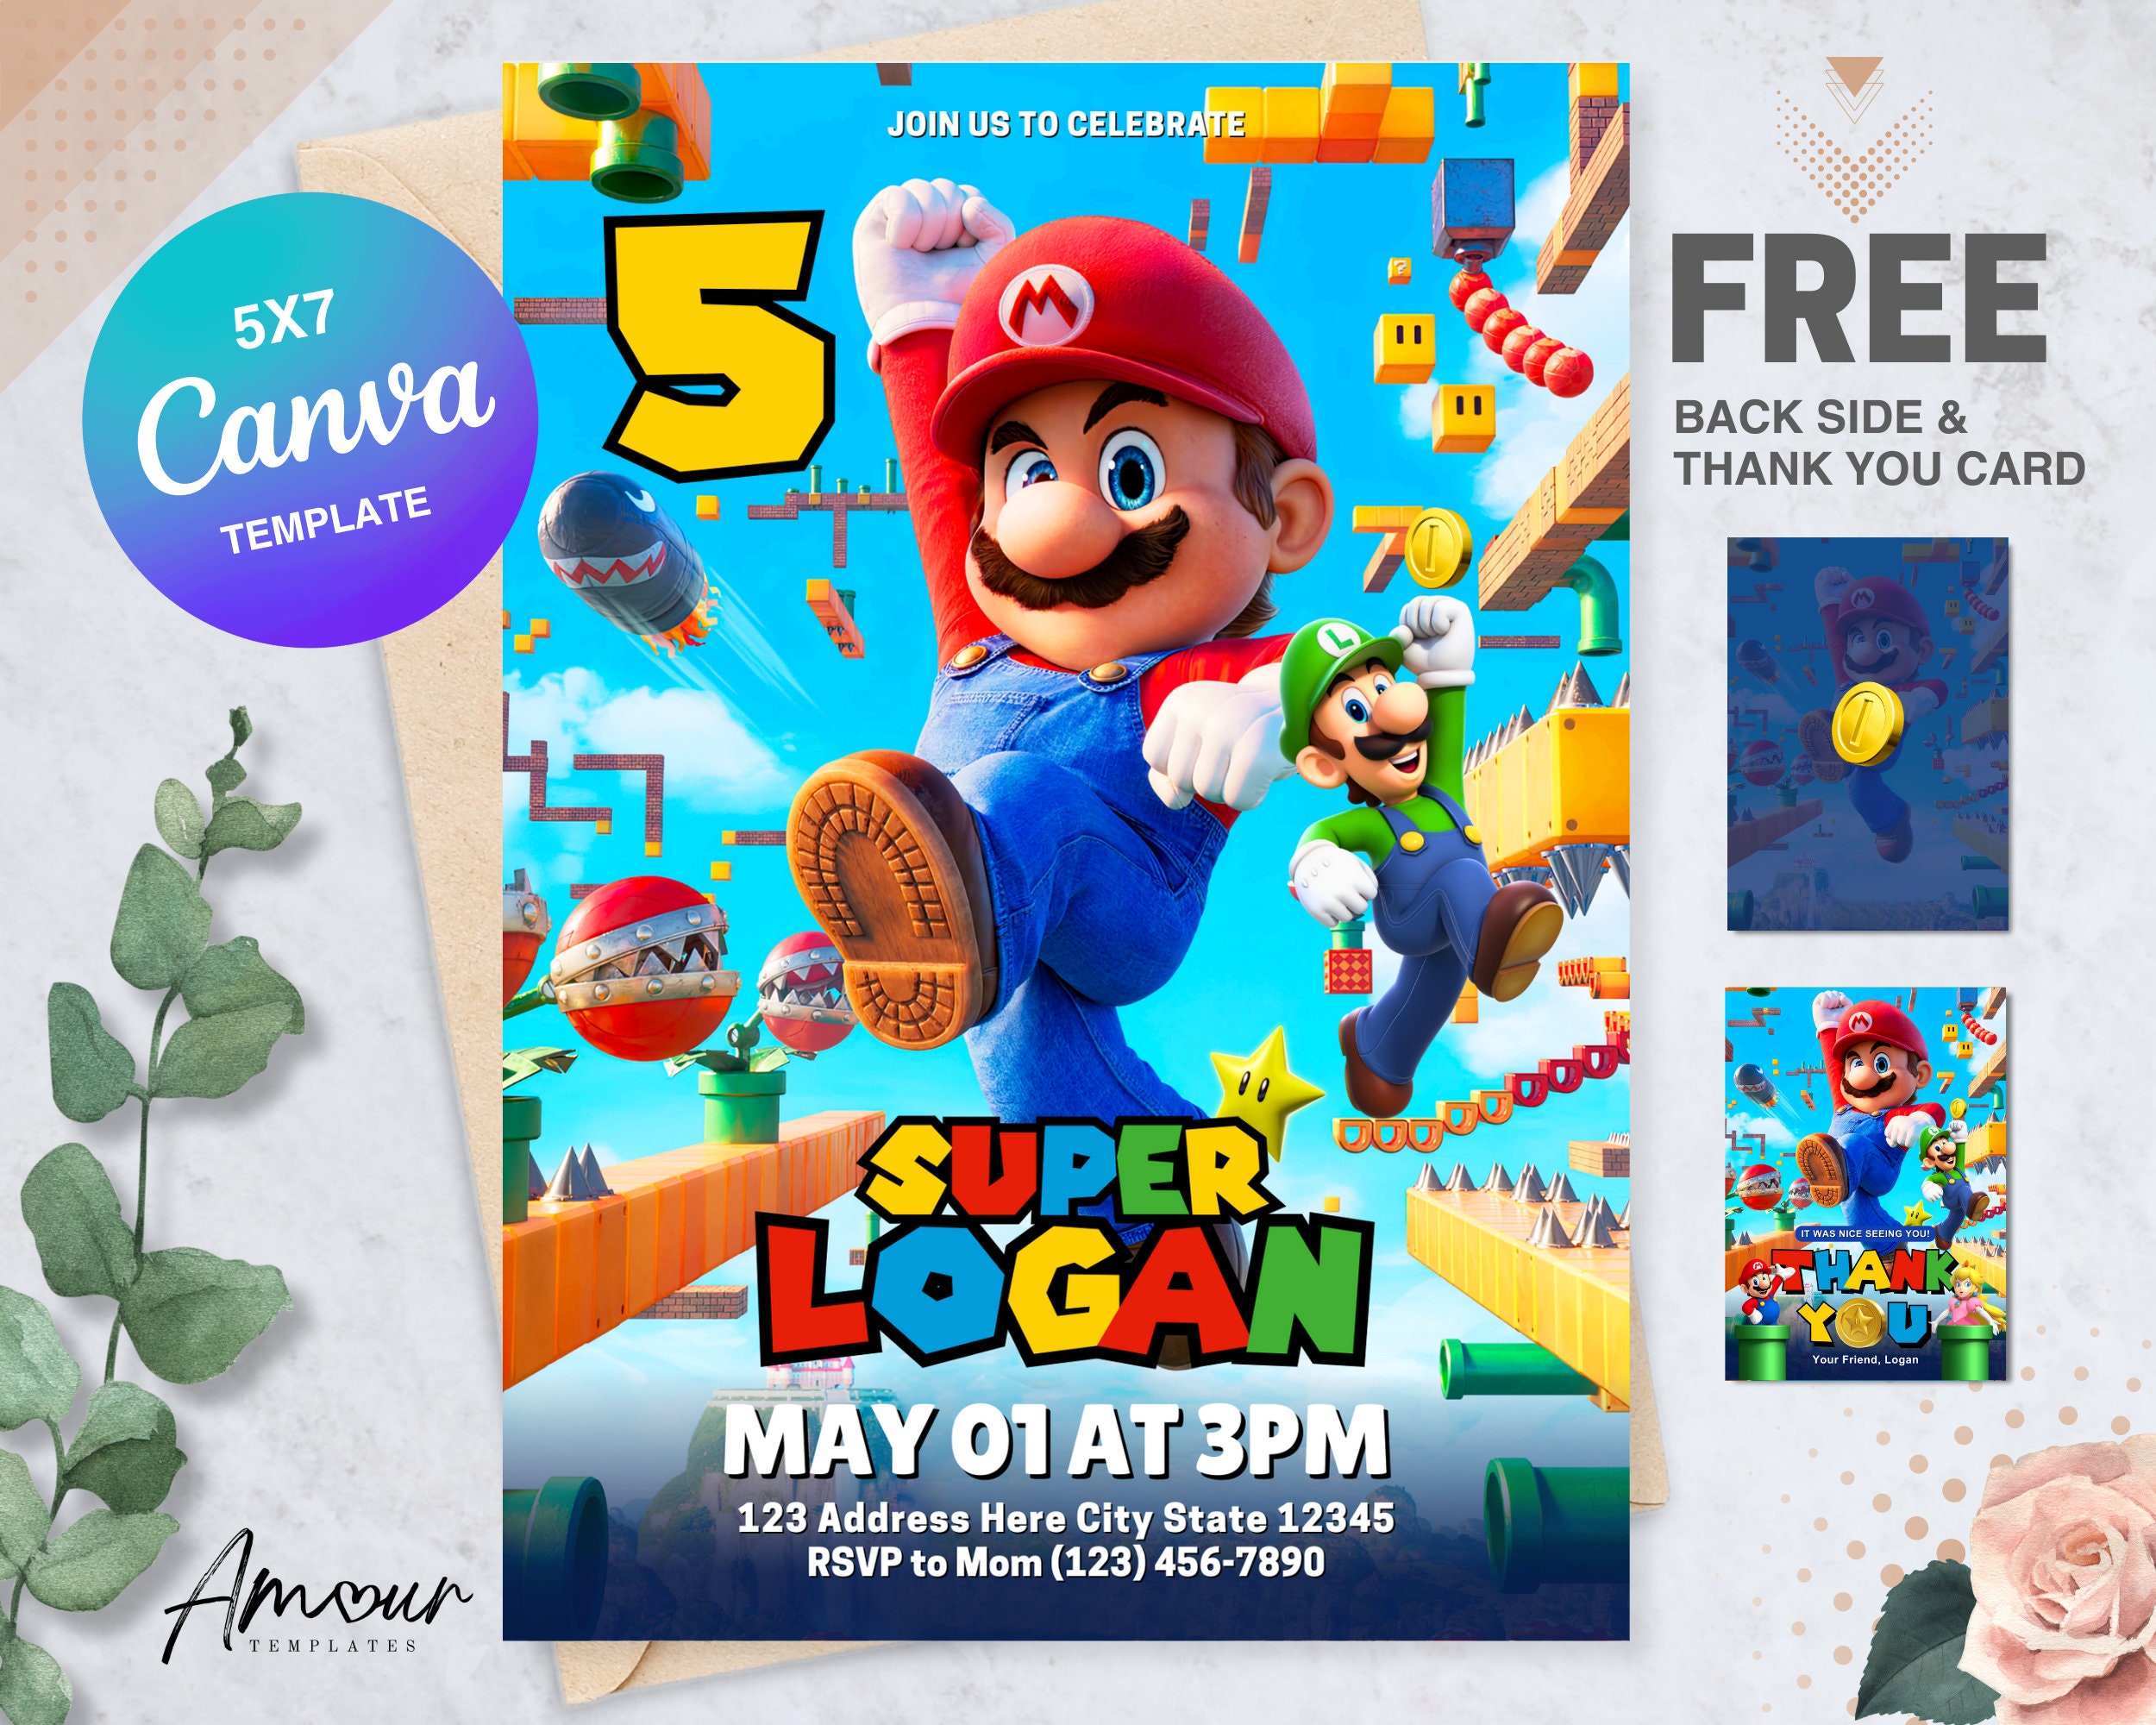 ▷ Digital Invitation Mario Bros Video Game Party, FREE